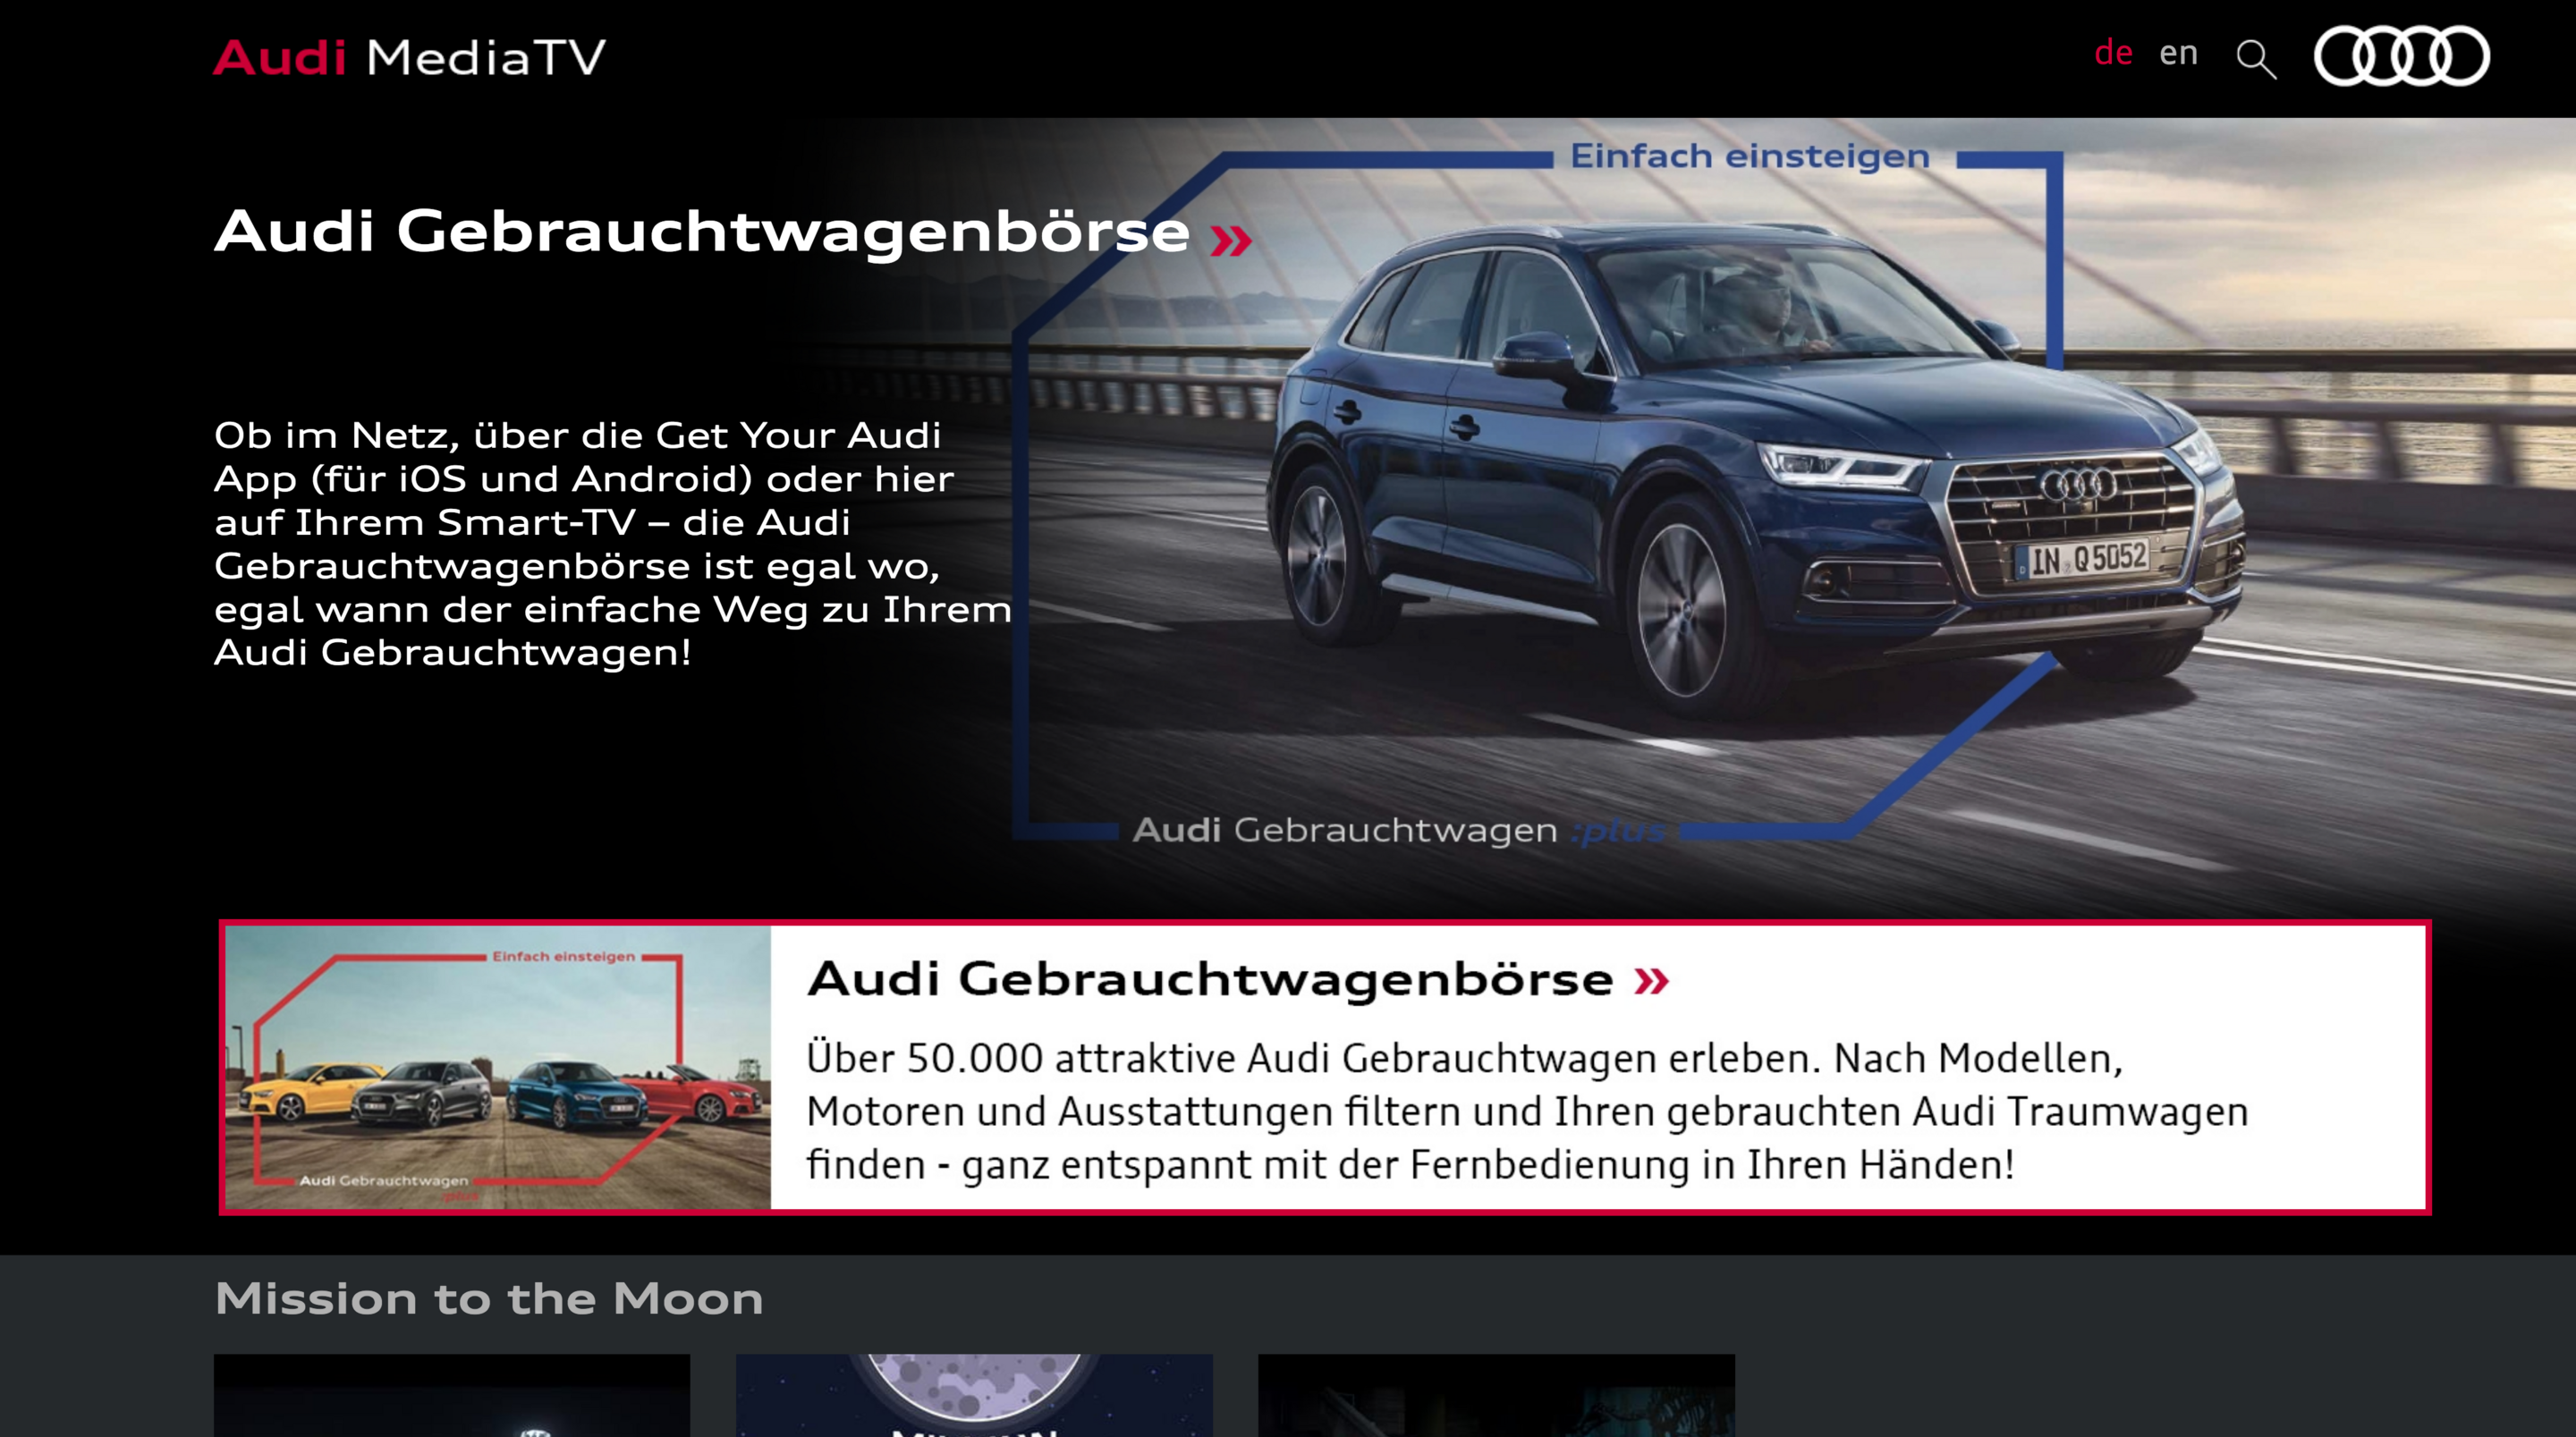 Audimedia.TV-App